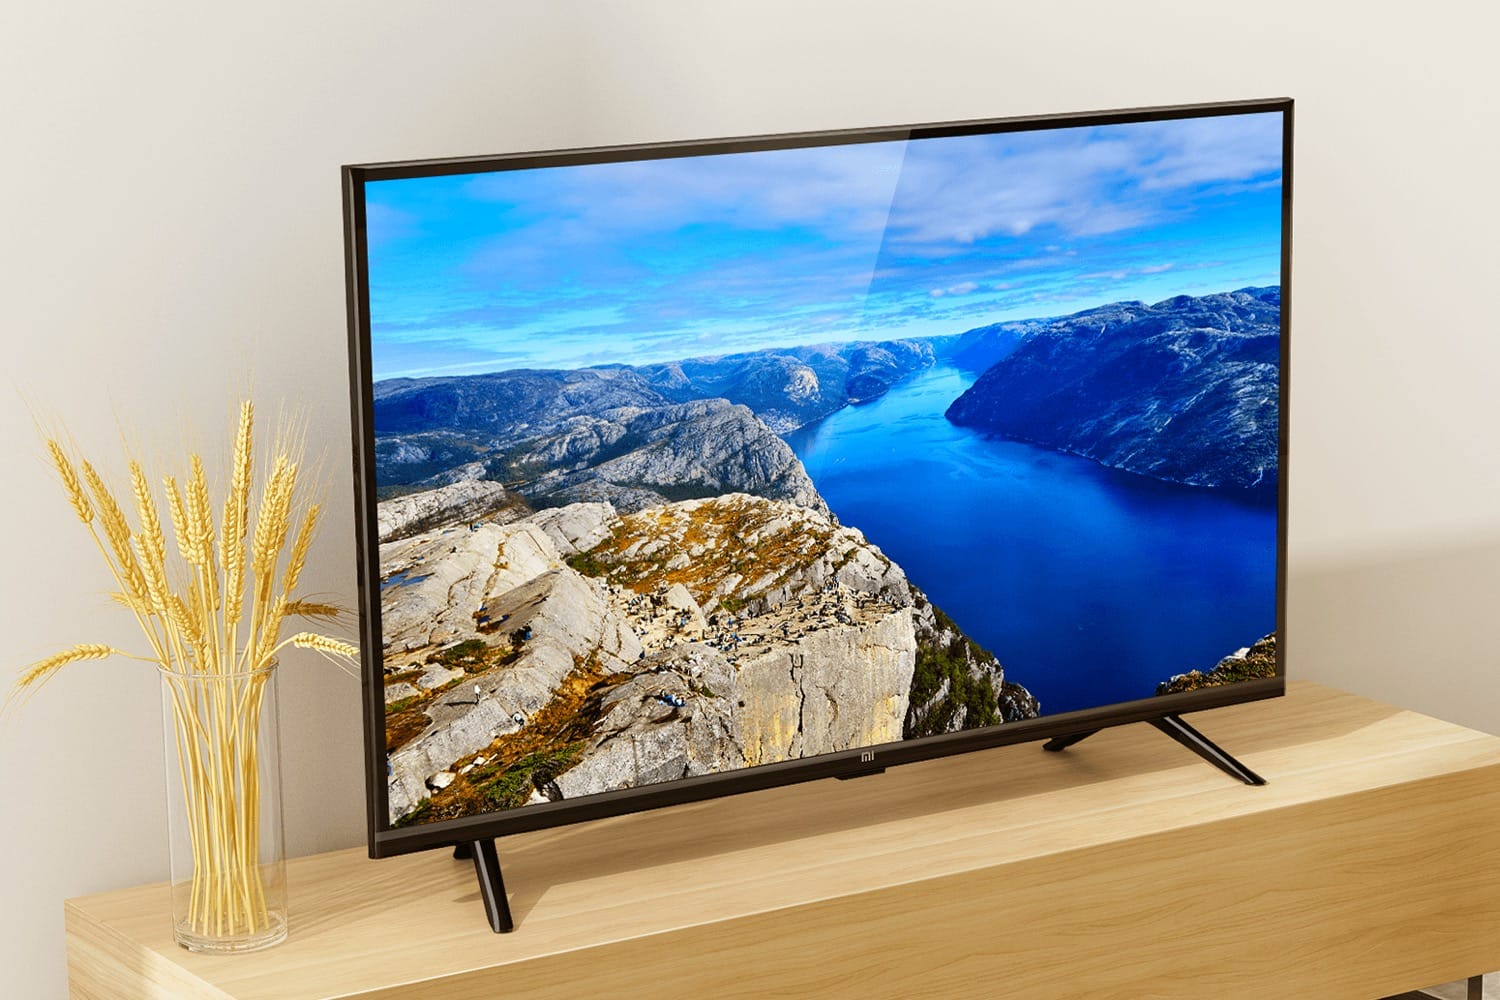 Xiaomi представила недорогой телевизор